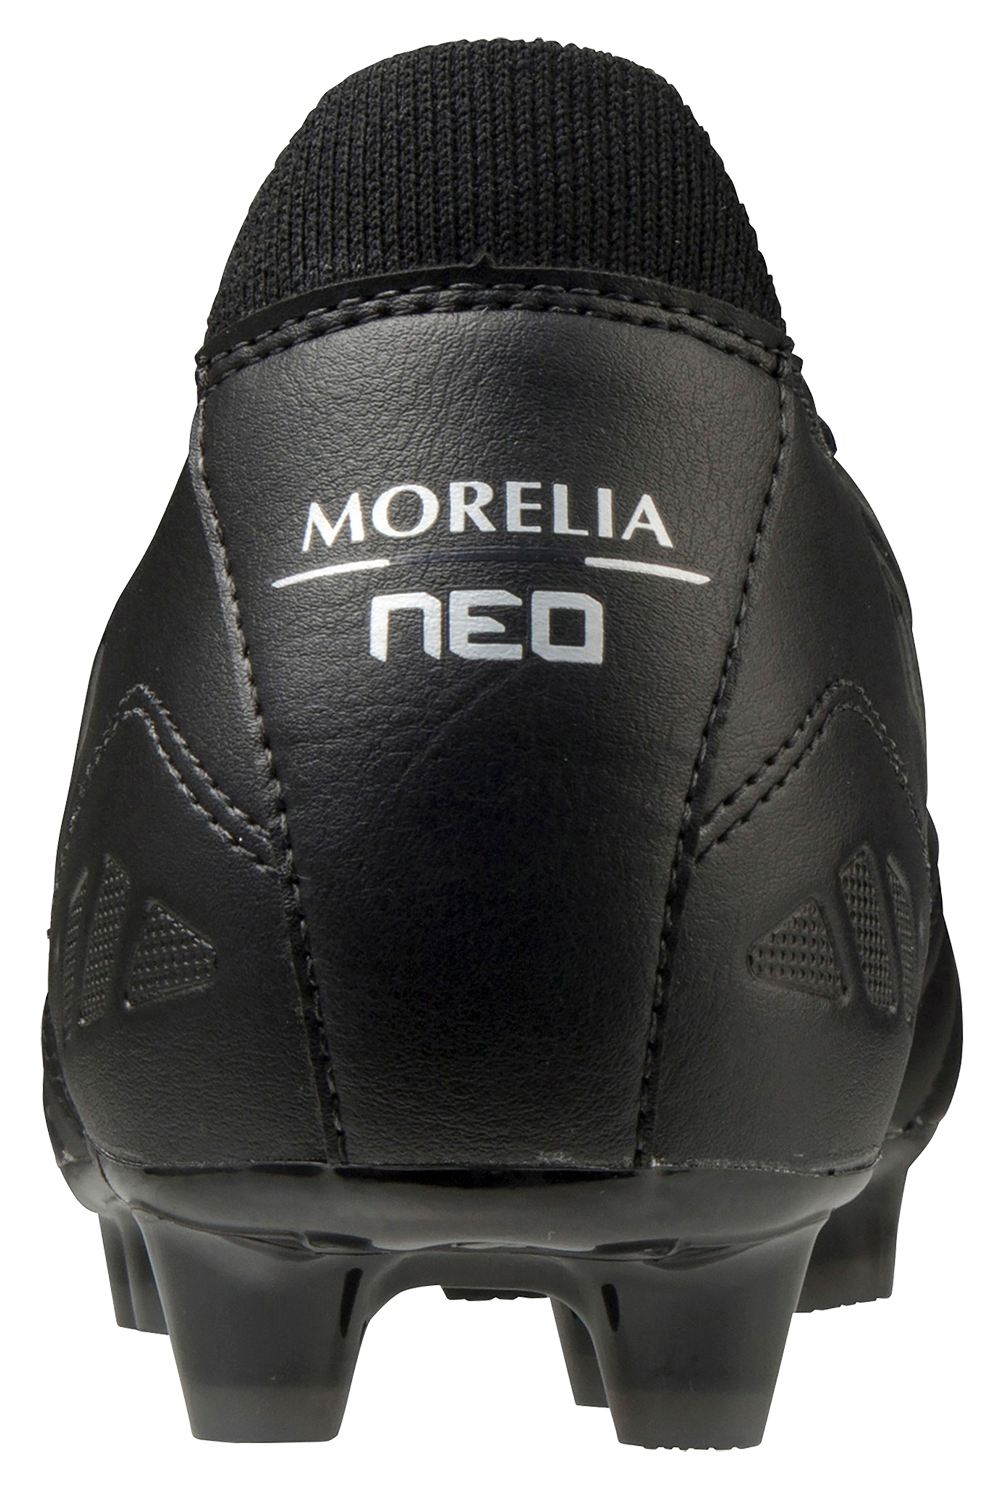 NEW Mizuno MORELIA NEO 3 PRO AG P1GA208400 BLACK Soccer Cleat Kangaroo Leather